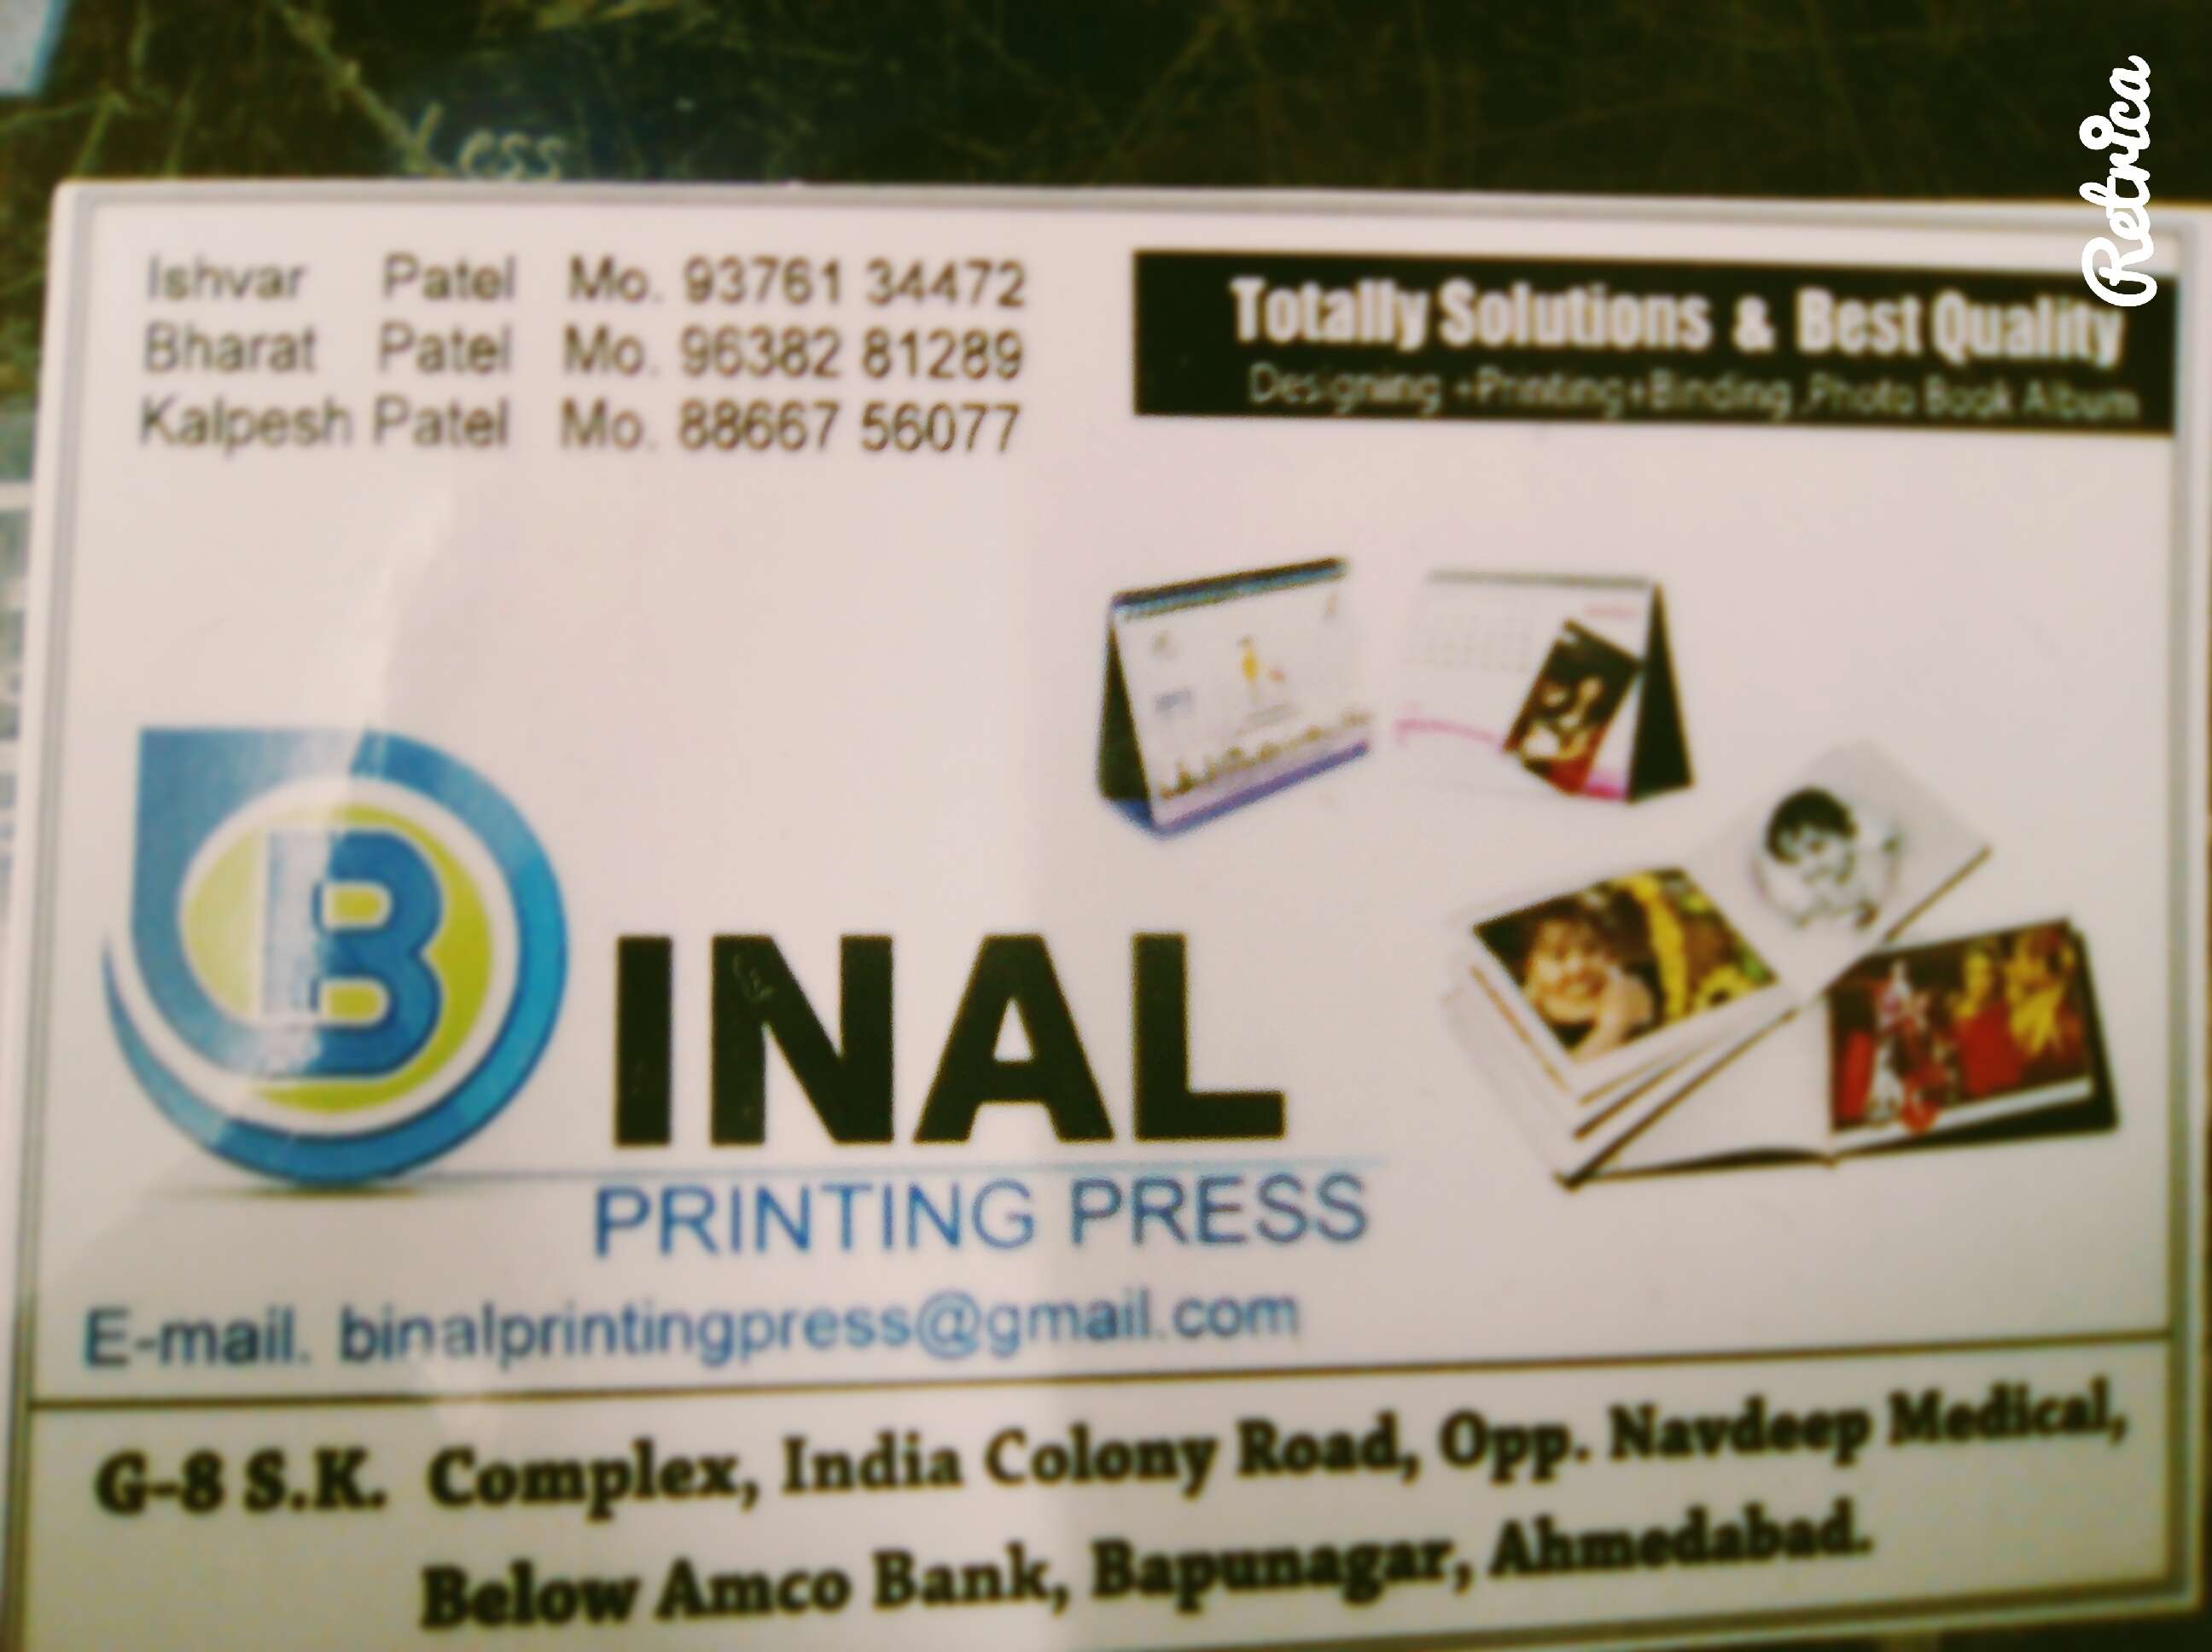 Binal Printing Press